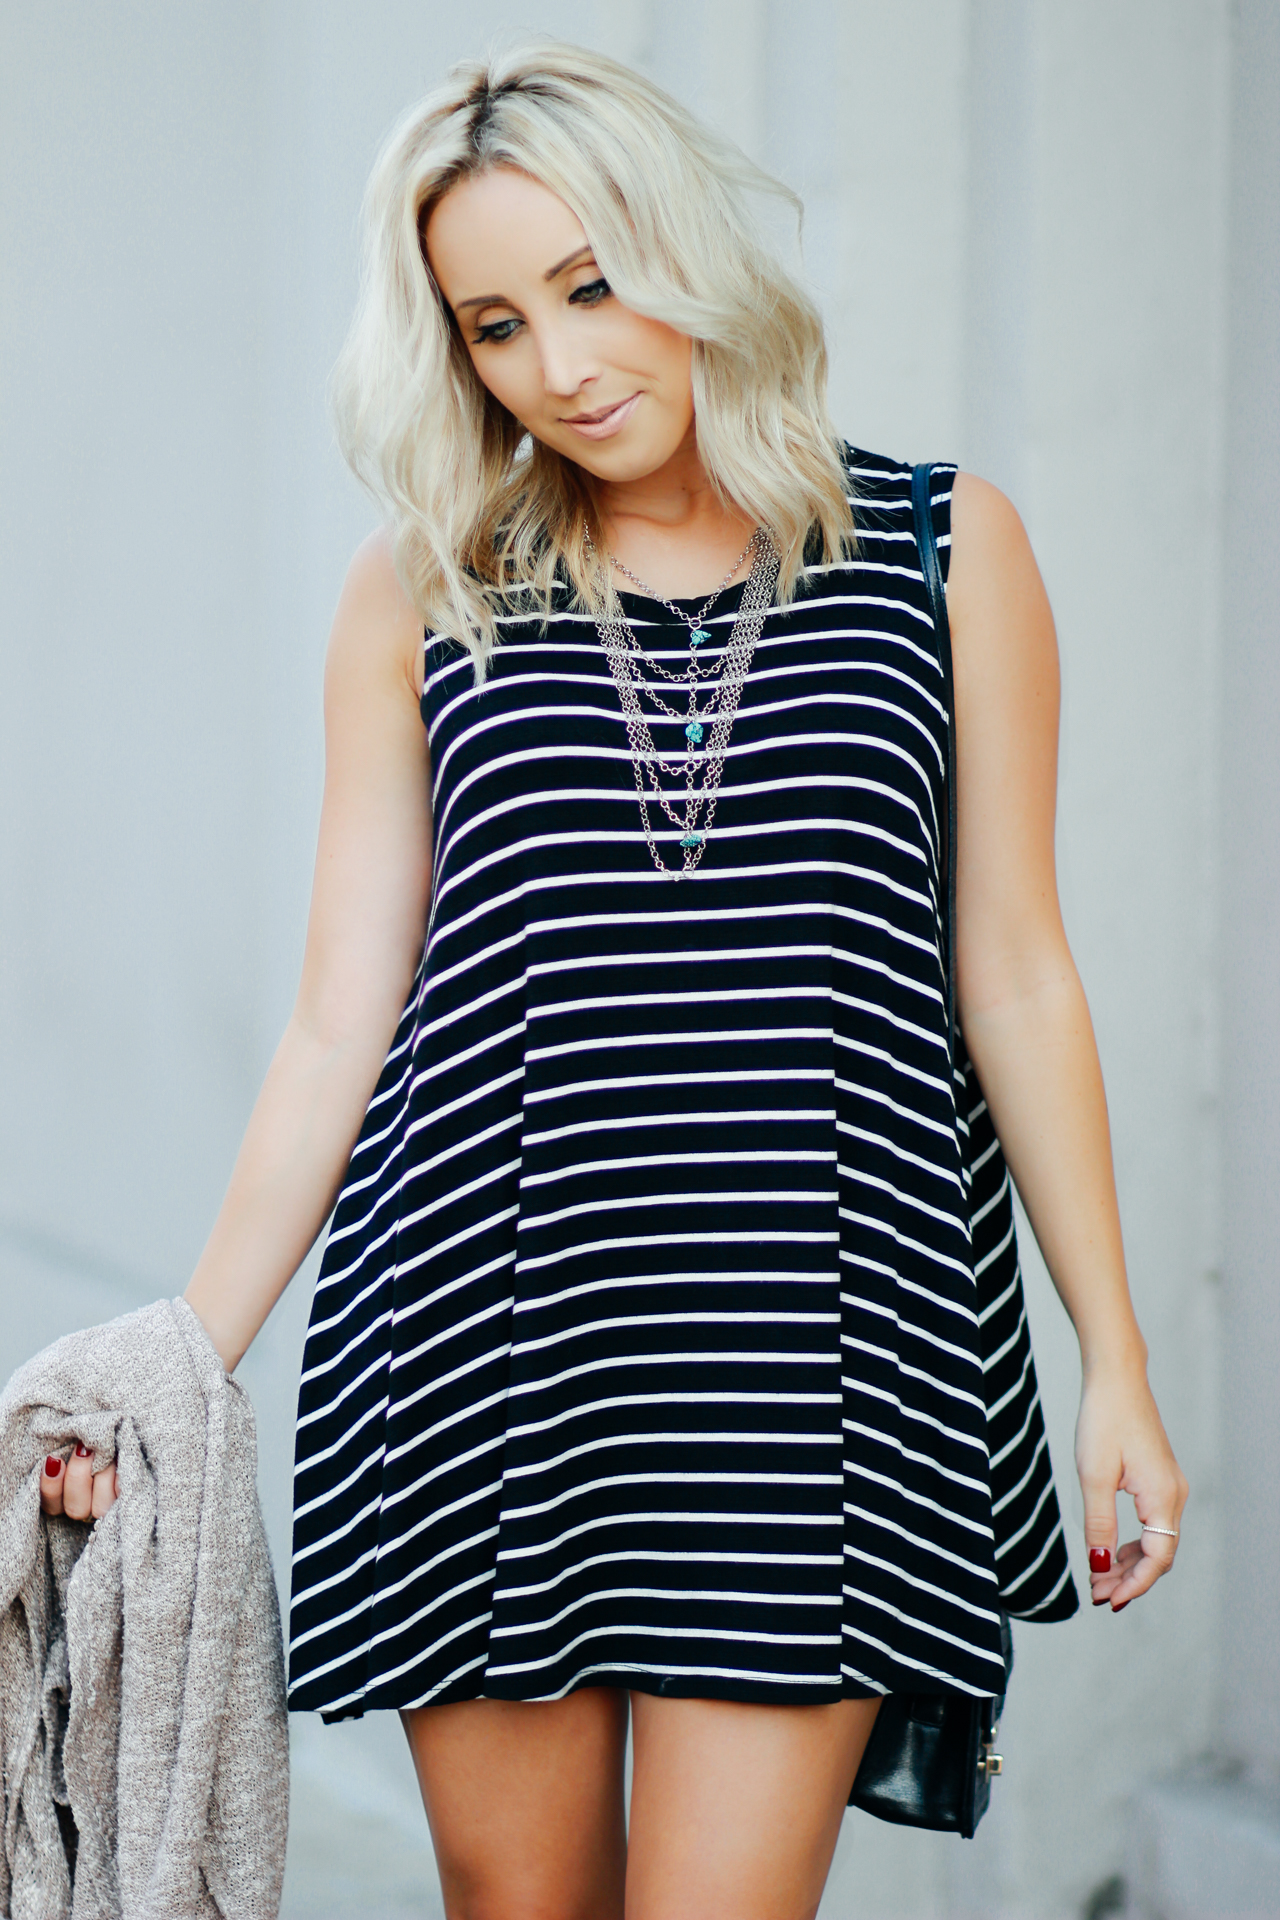 Striped Baby Doll Dress | StyledbyBlondie.com